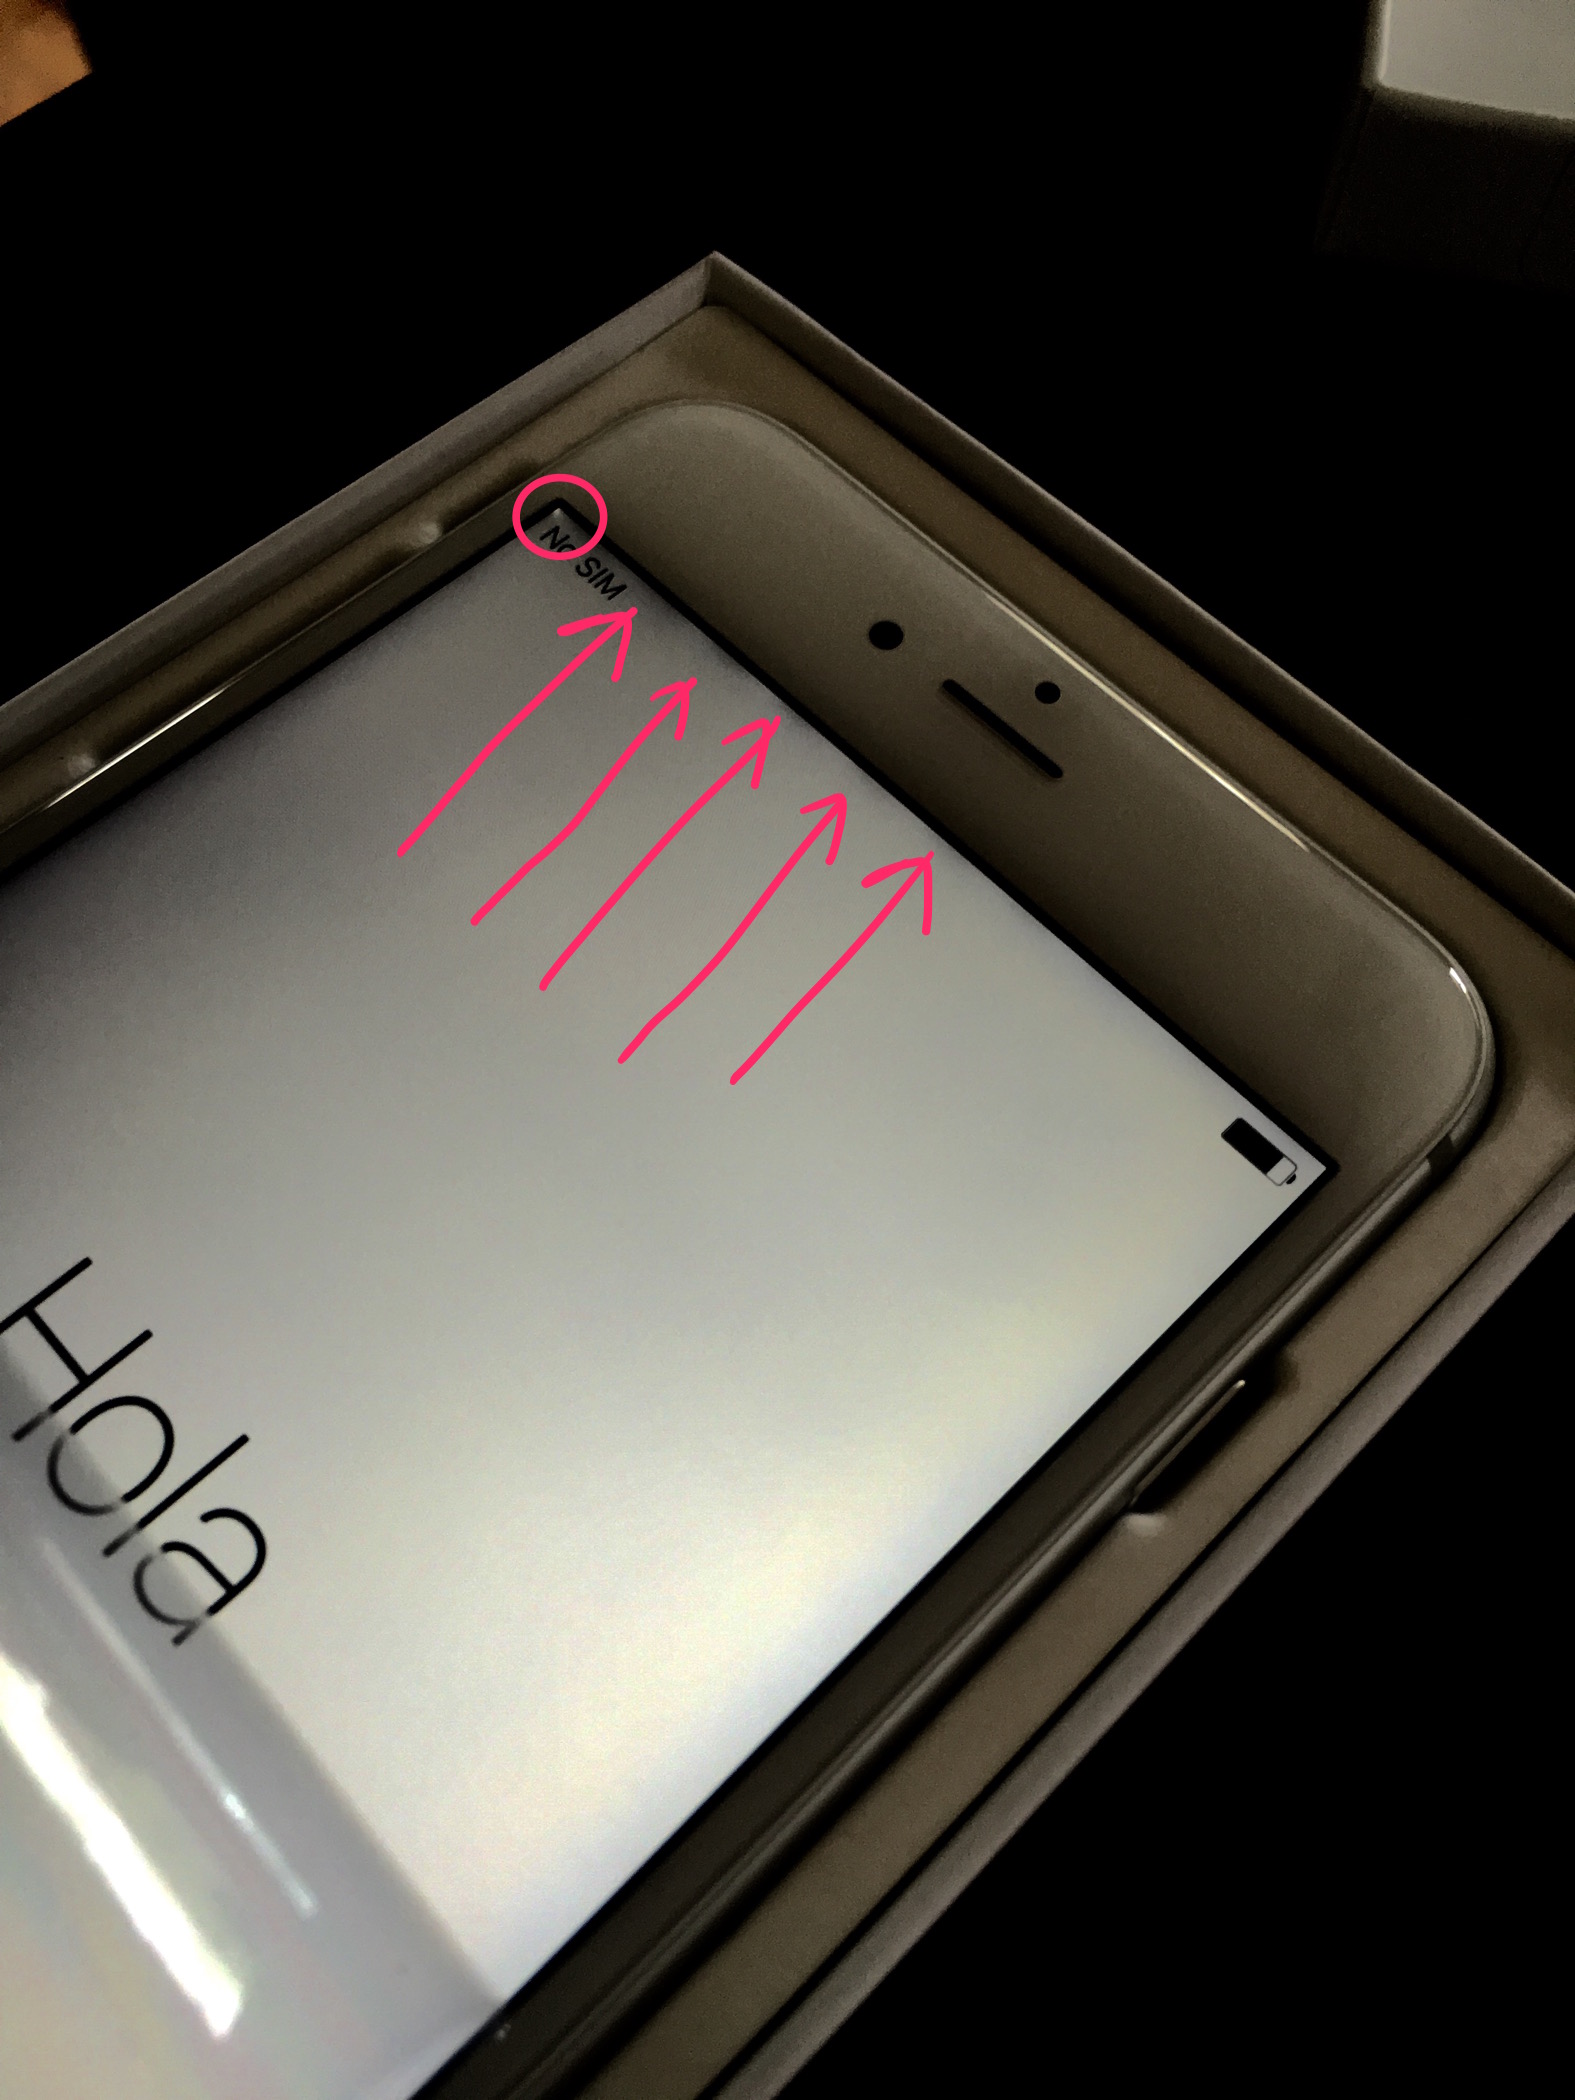 Problemas de pantalla sangrante de retroiluminación del iPhone 6S Plus 1